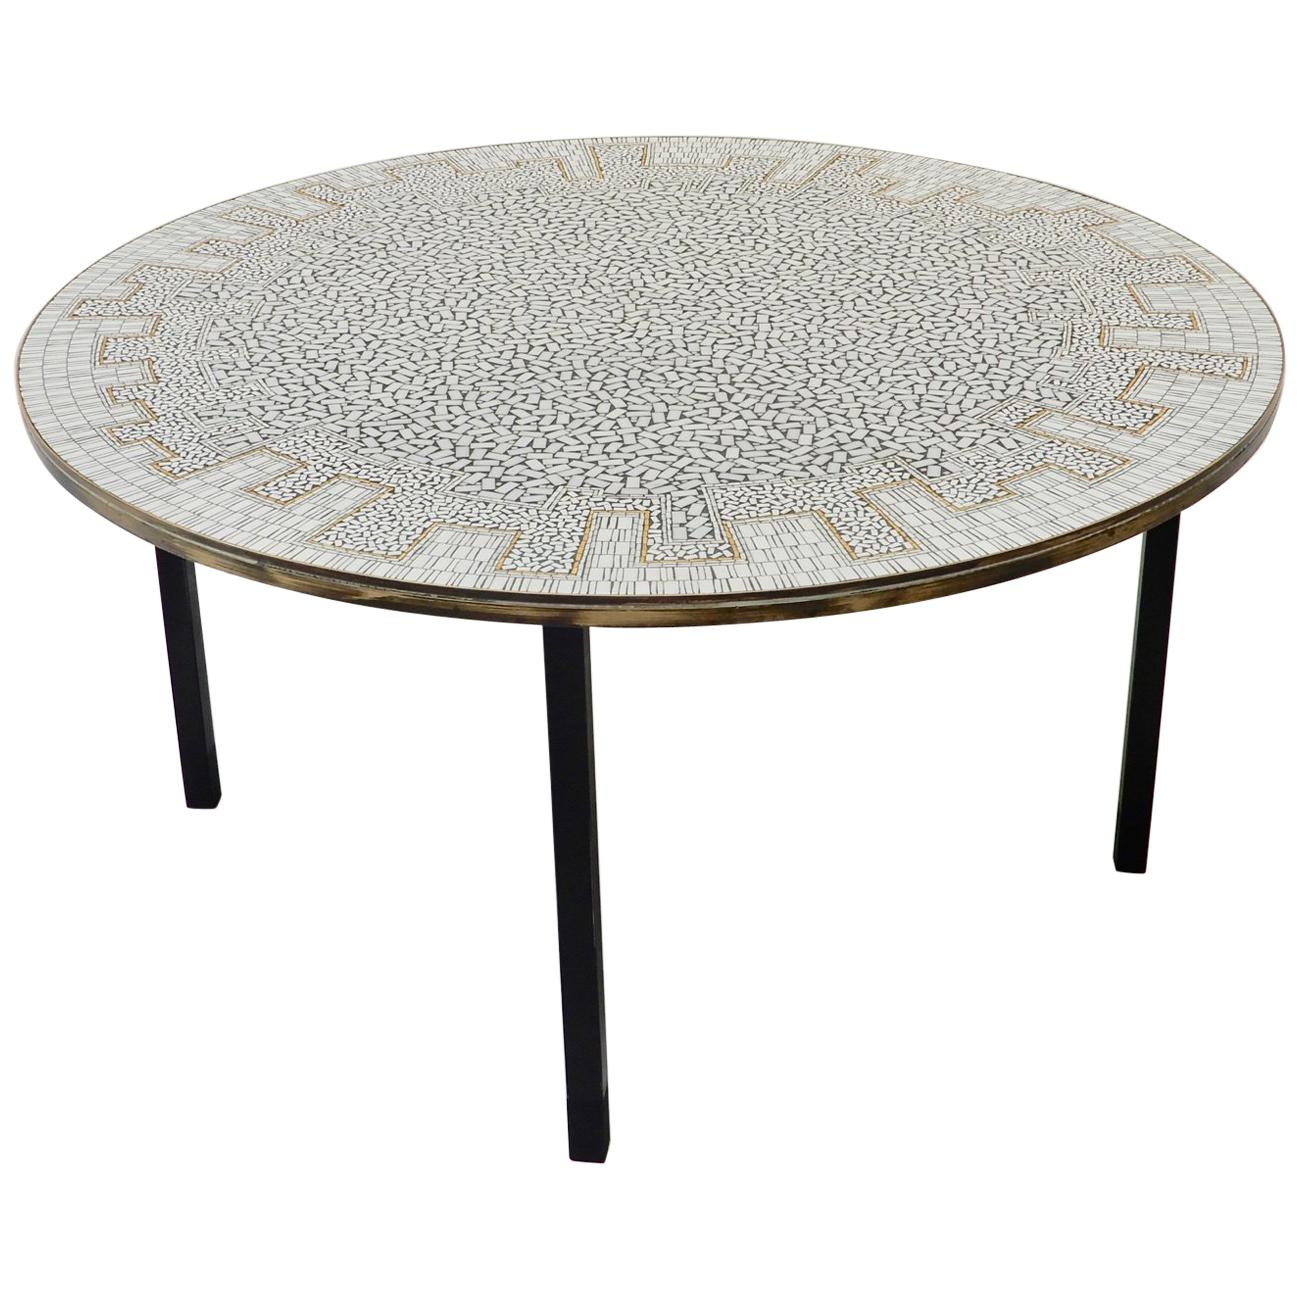 Circular German Ceramic Tiled Coffee Table with Metal Base, 1960s